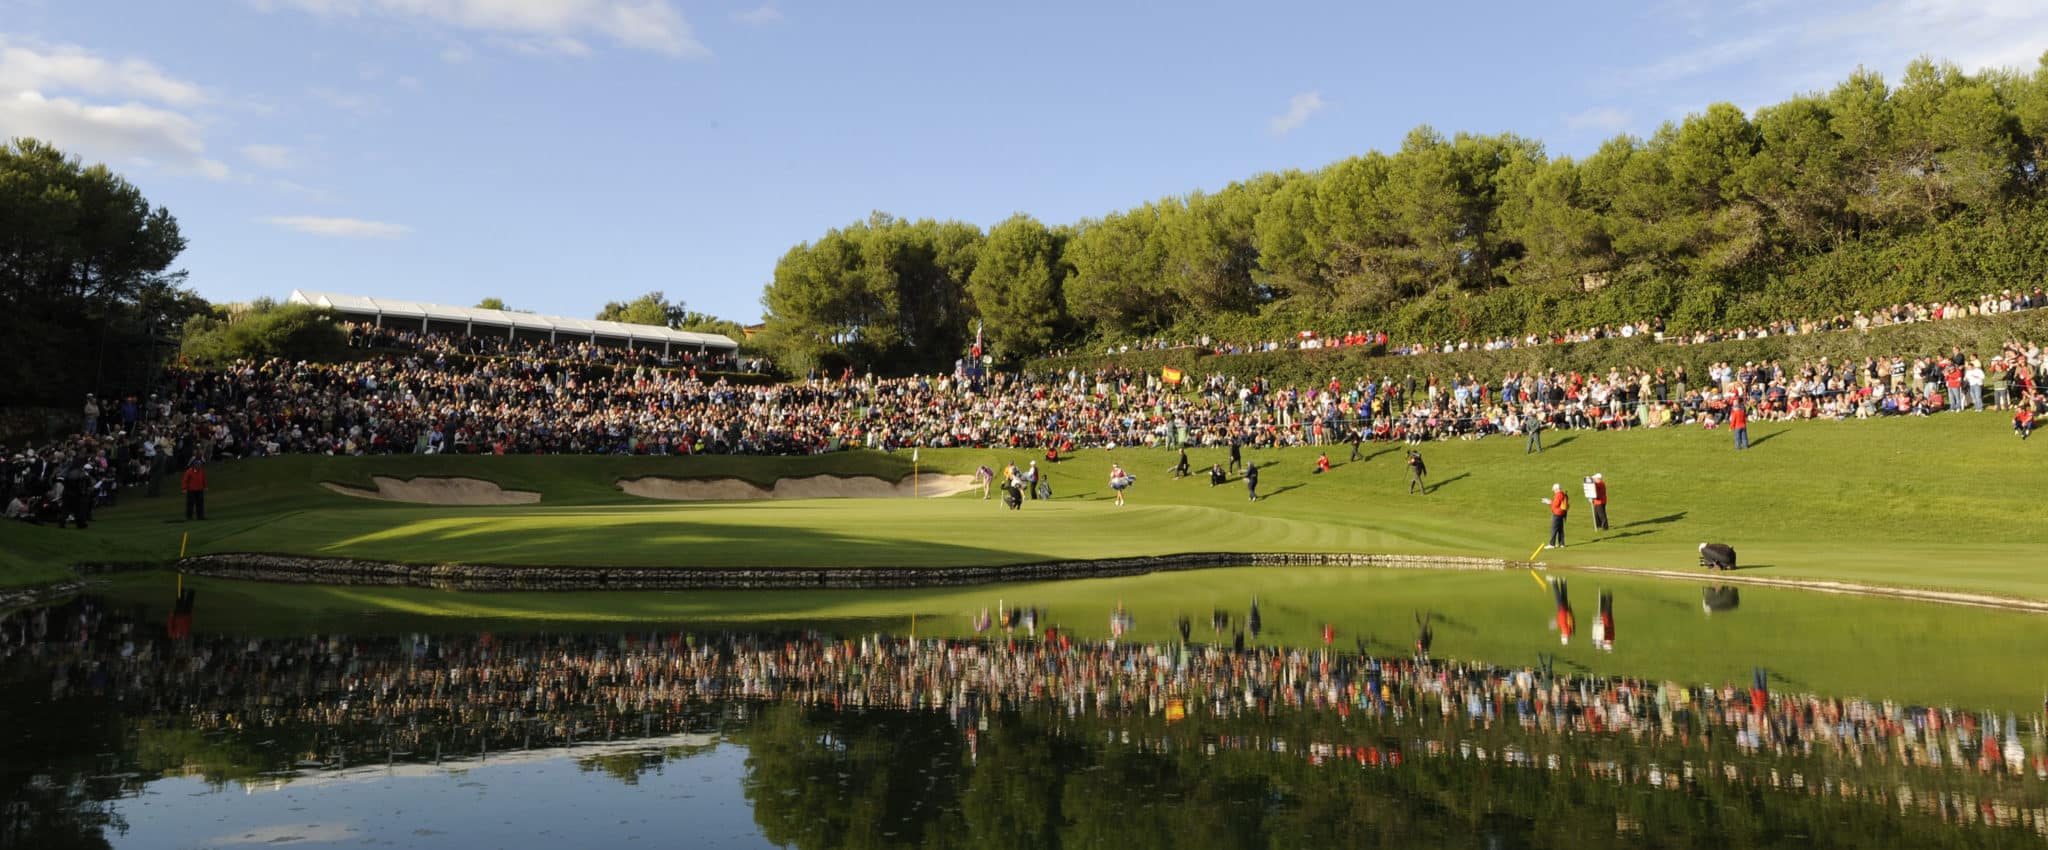 Real Club Valderrama - A legendary golf course in Spain - Lecoingolf